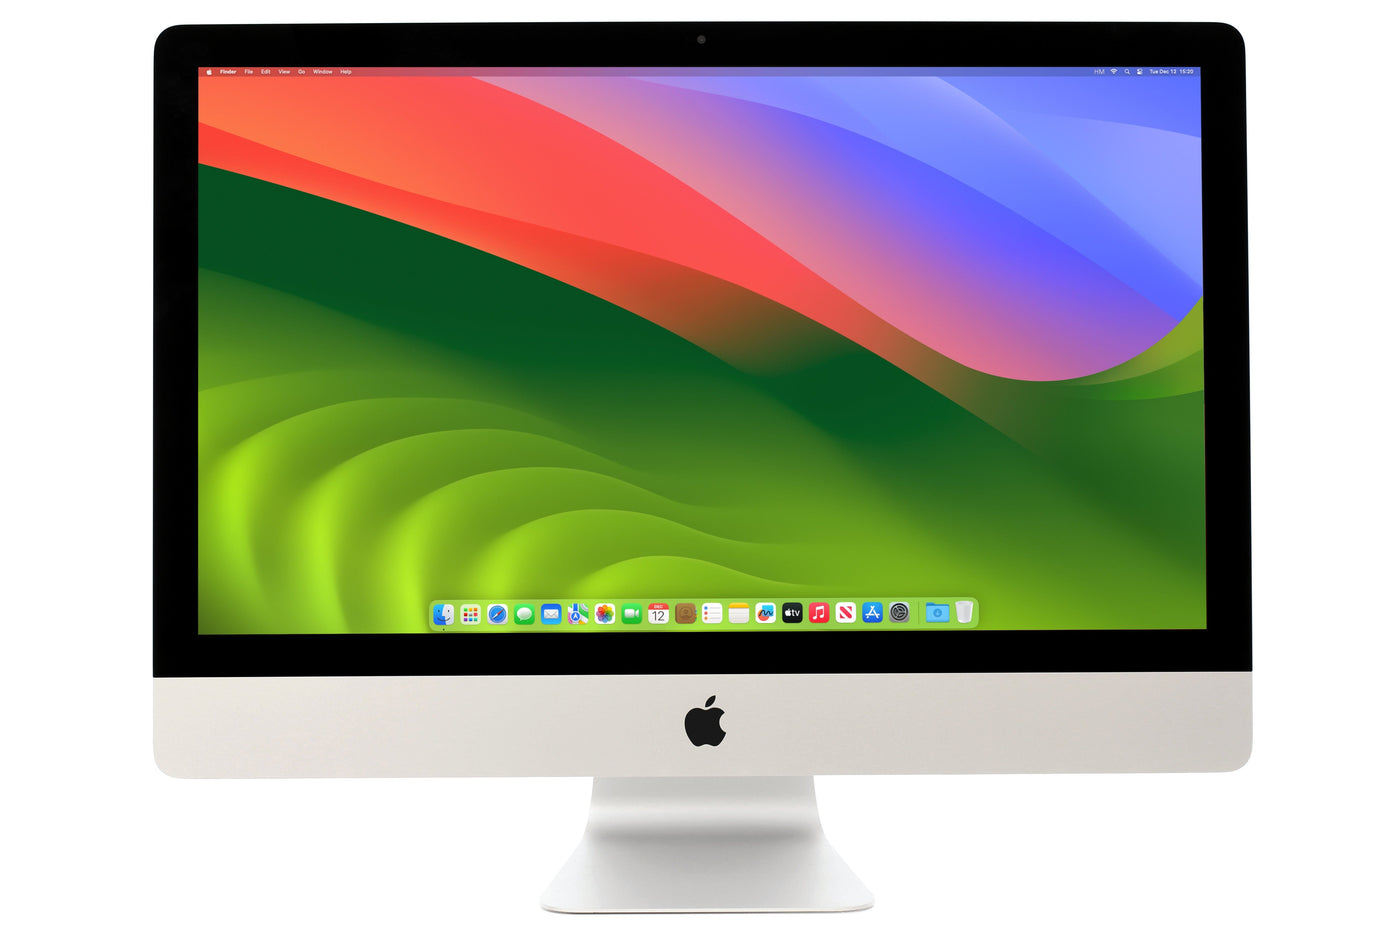 Apple iMac 27-inch iMac 5K Retina 27-inch Core i5 3.7GHz (2019) - Excellent